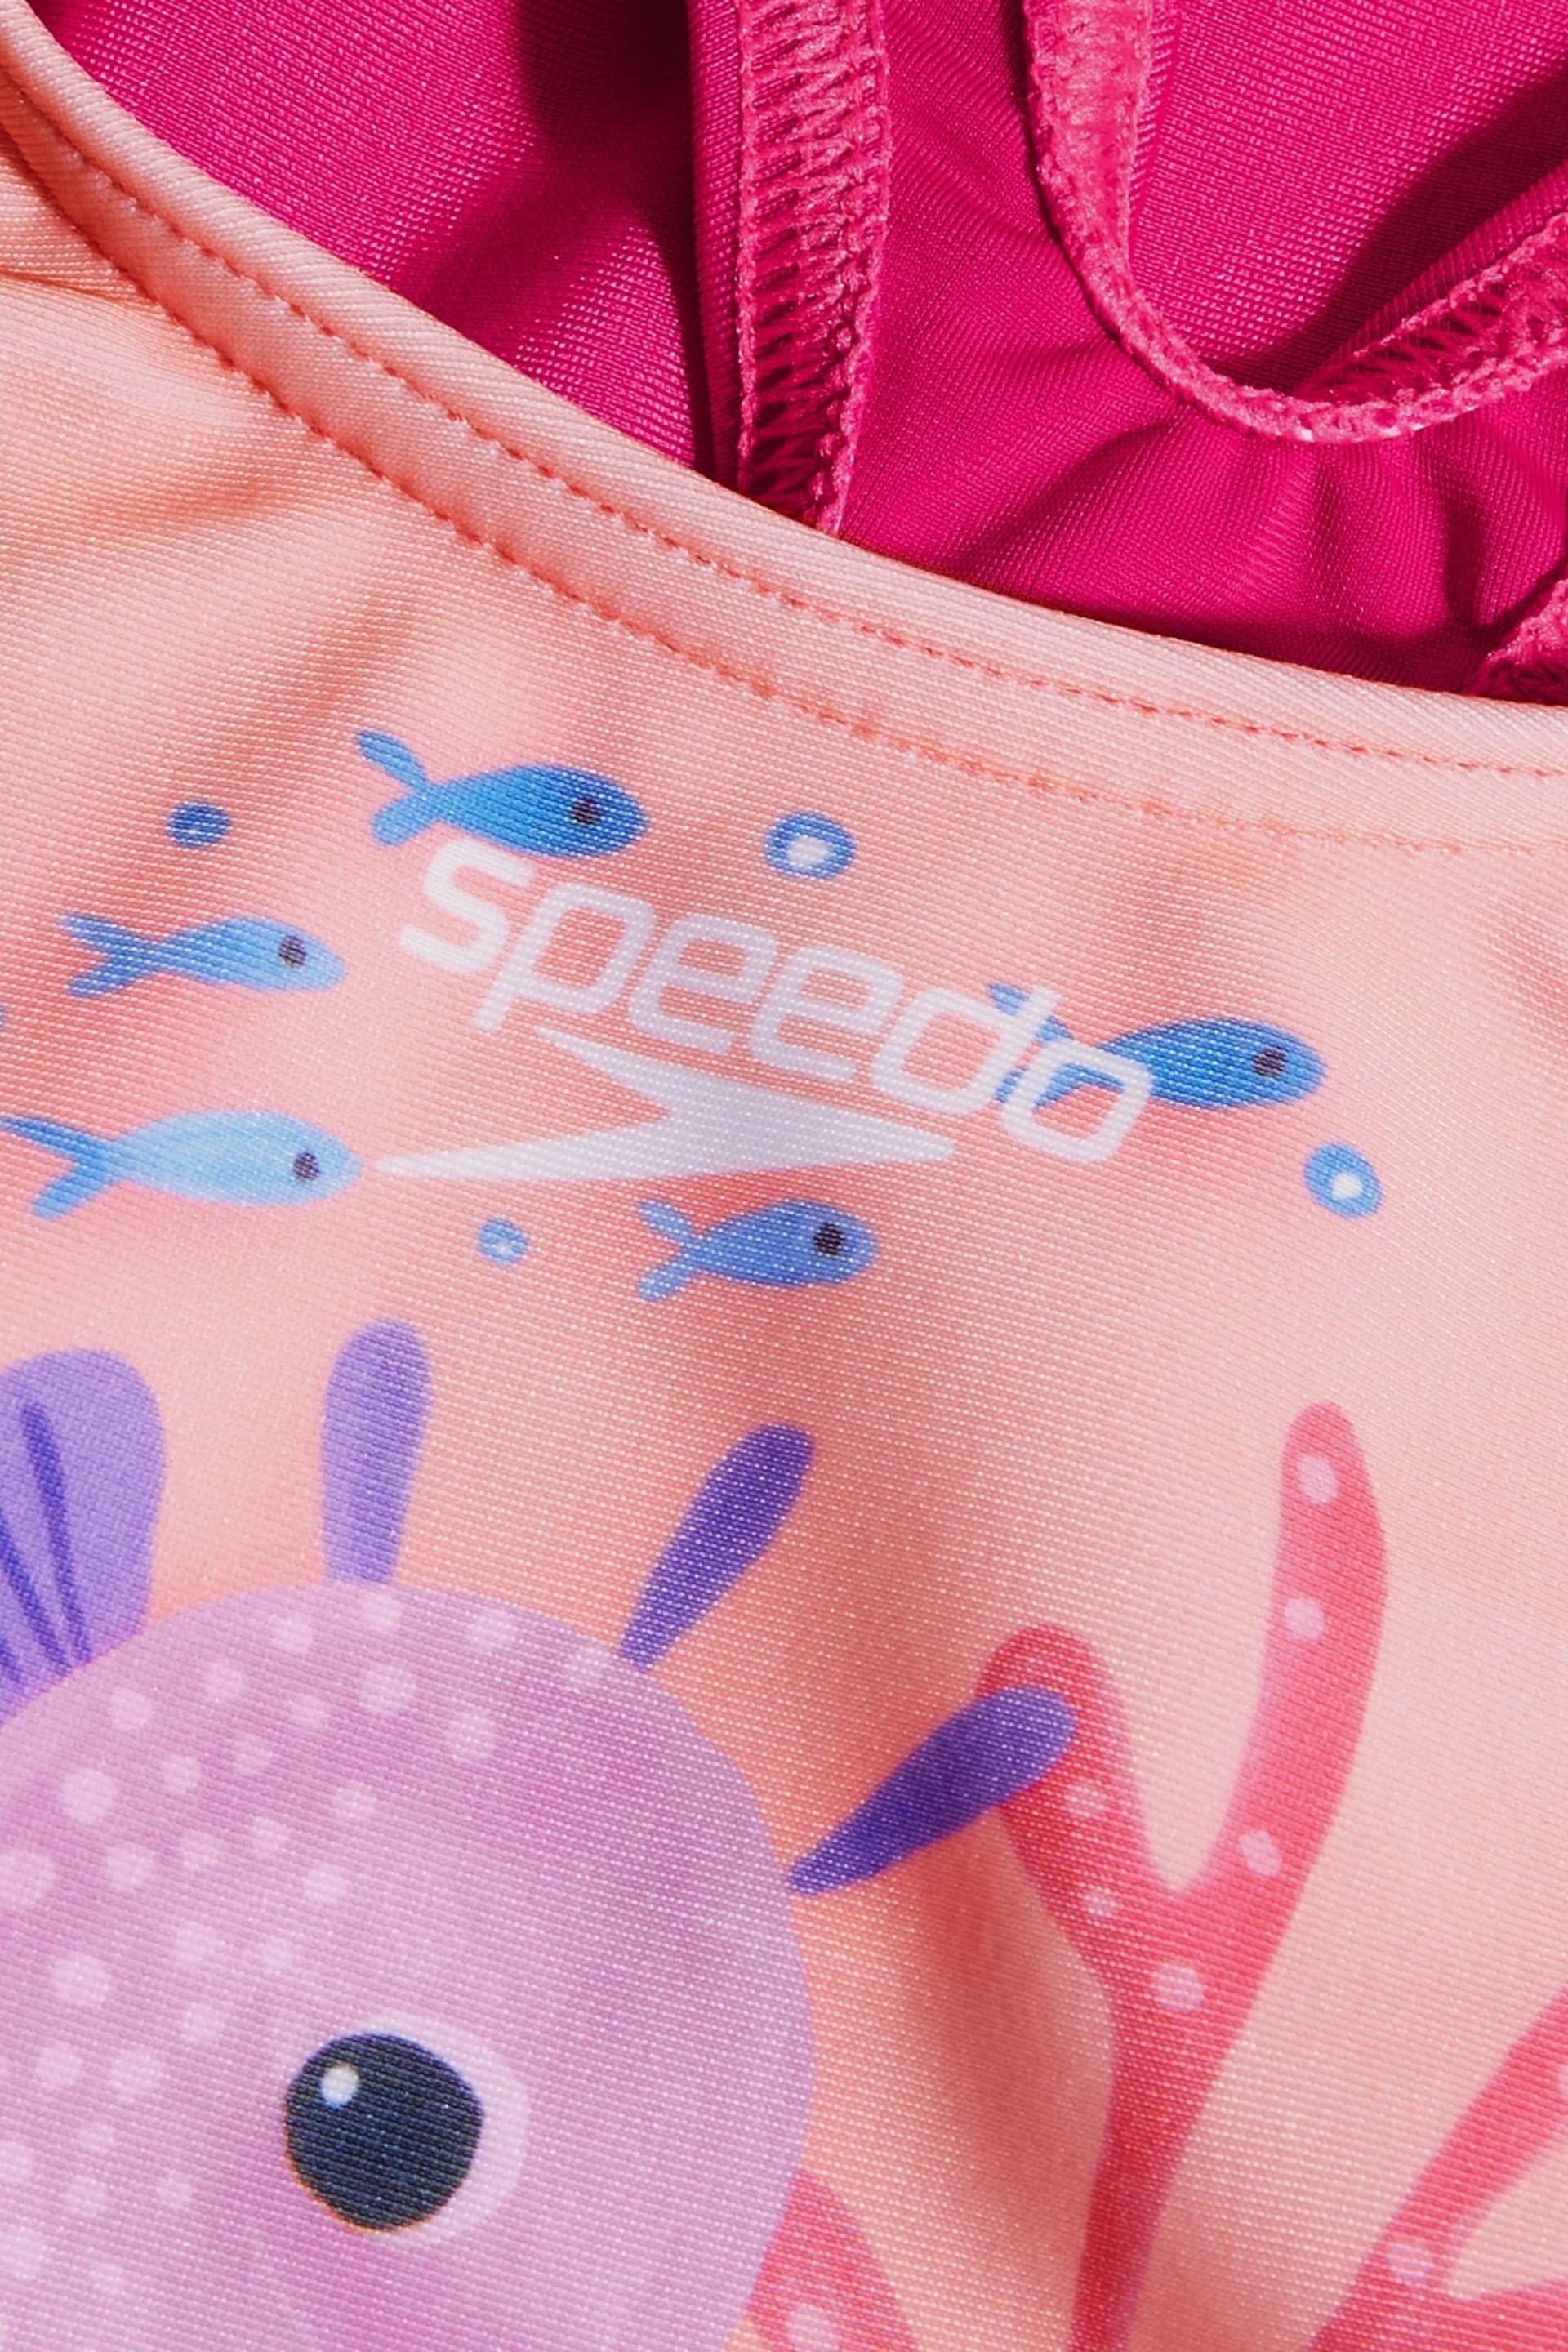 Speedo Girls Pink Digital Printed Swimsuit - Image 3 of 5